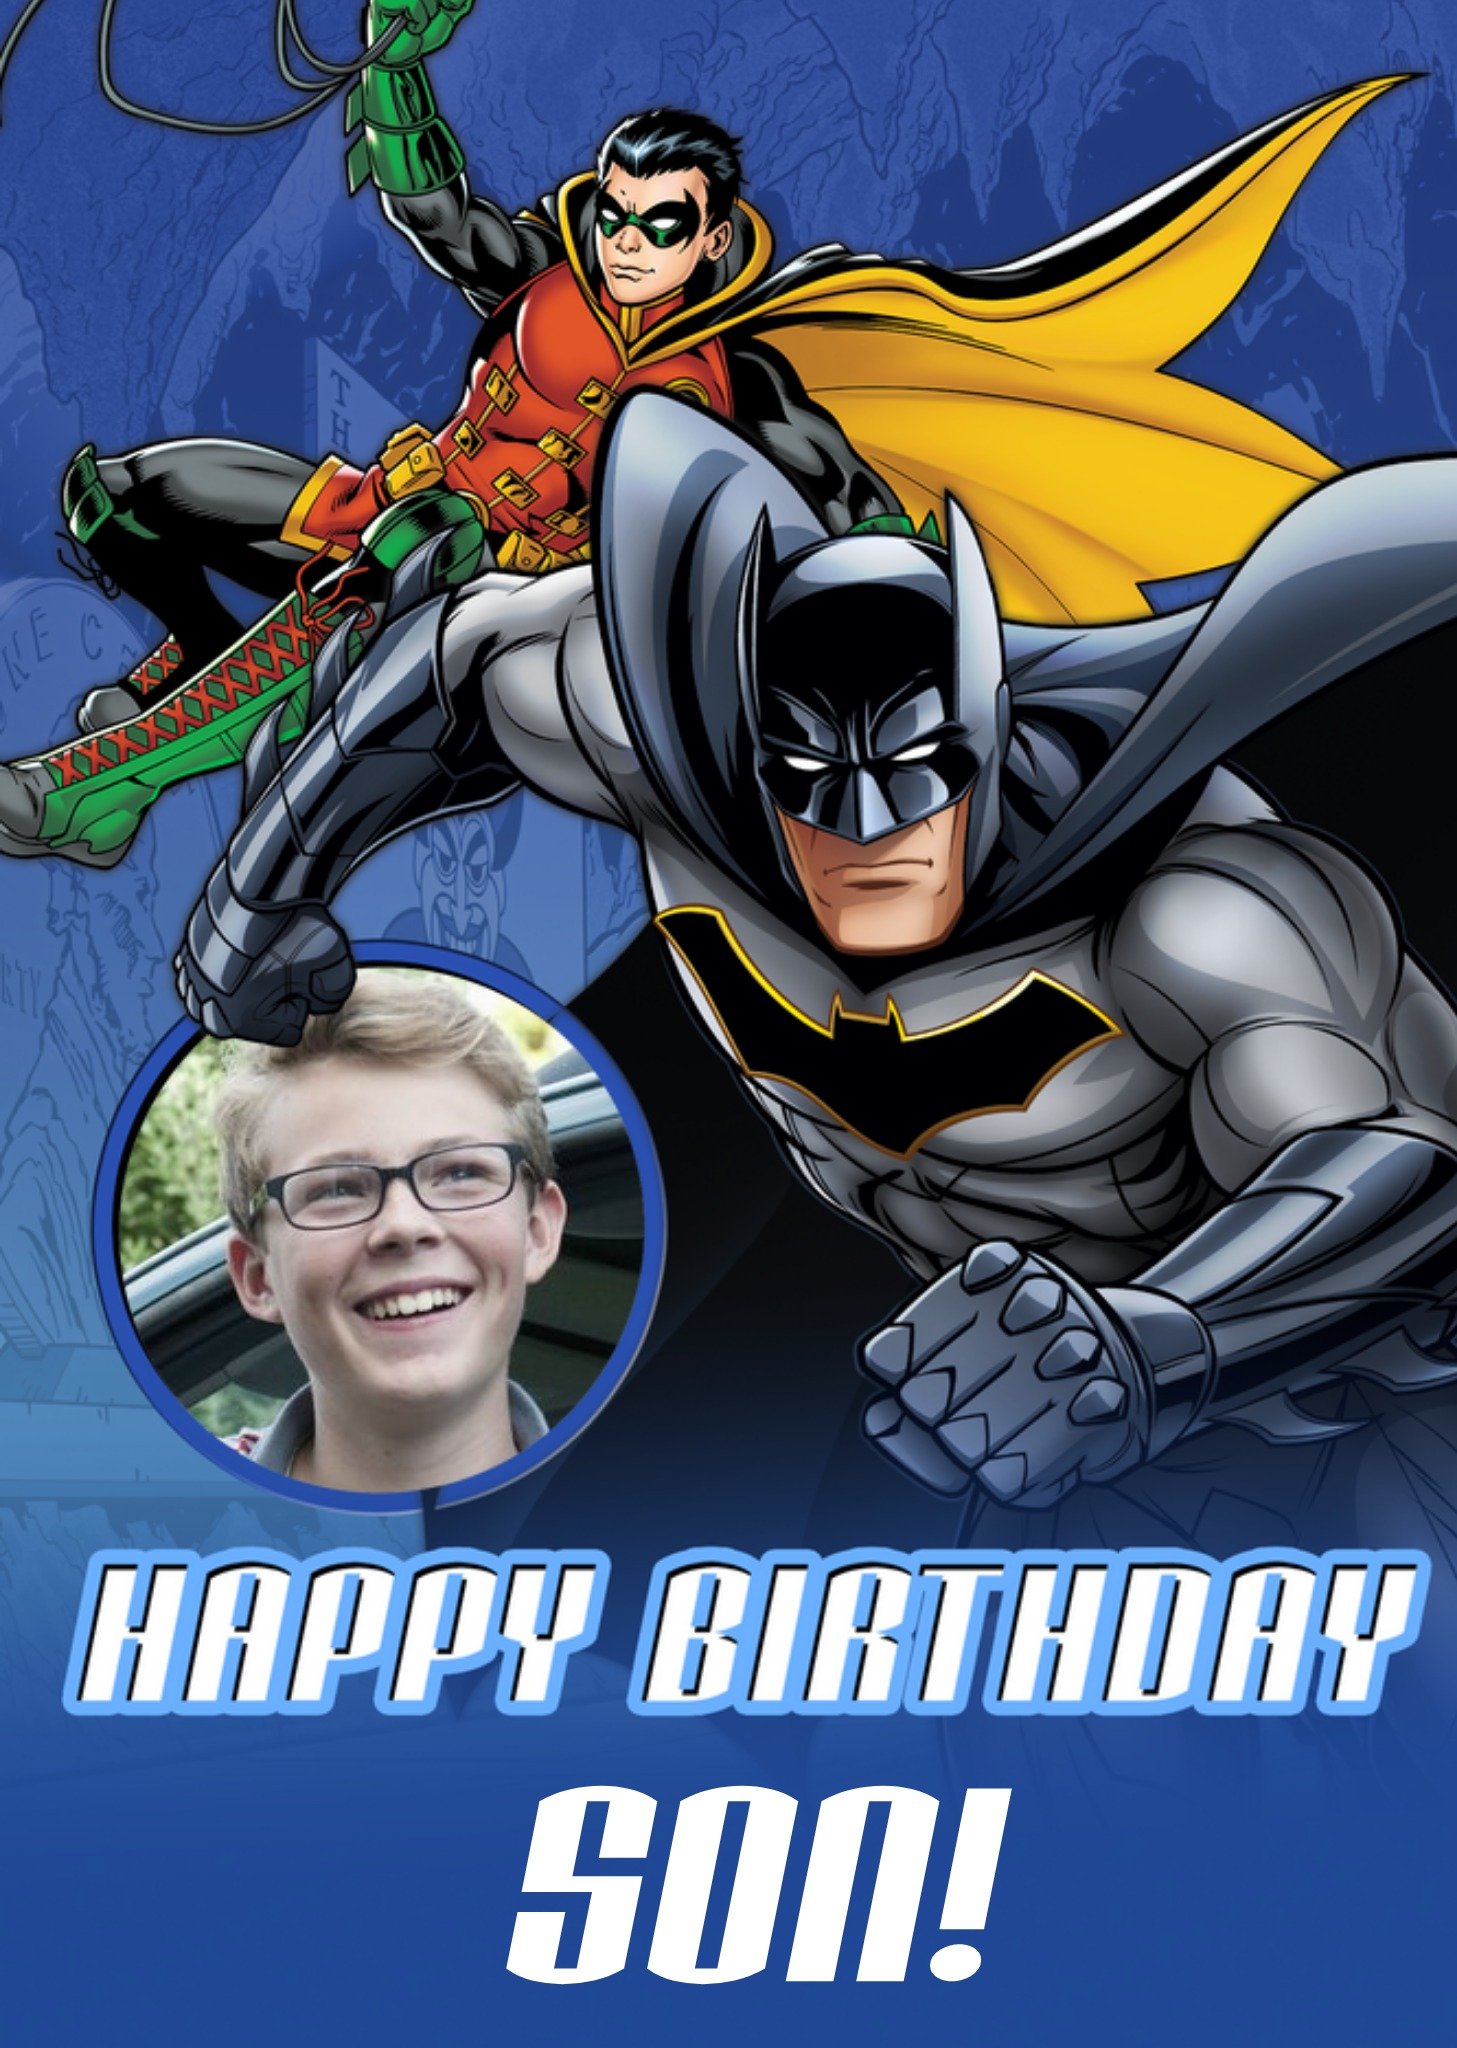 Illustrated Batman And Robin Photo Upload Son Birthday Card Ecard